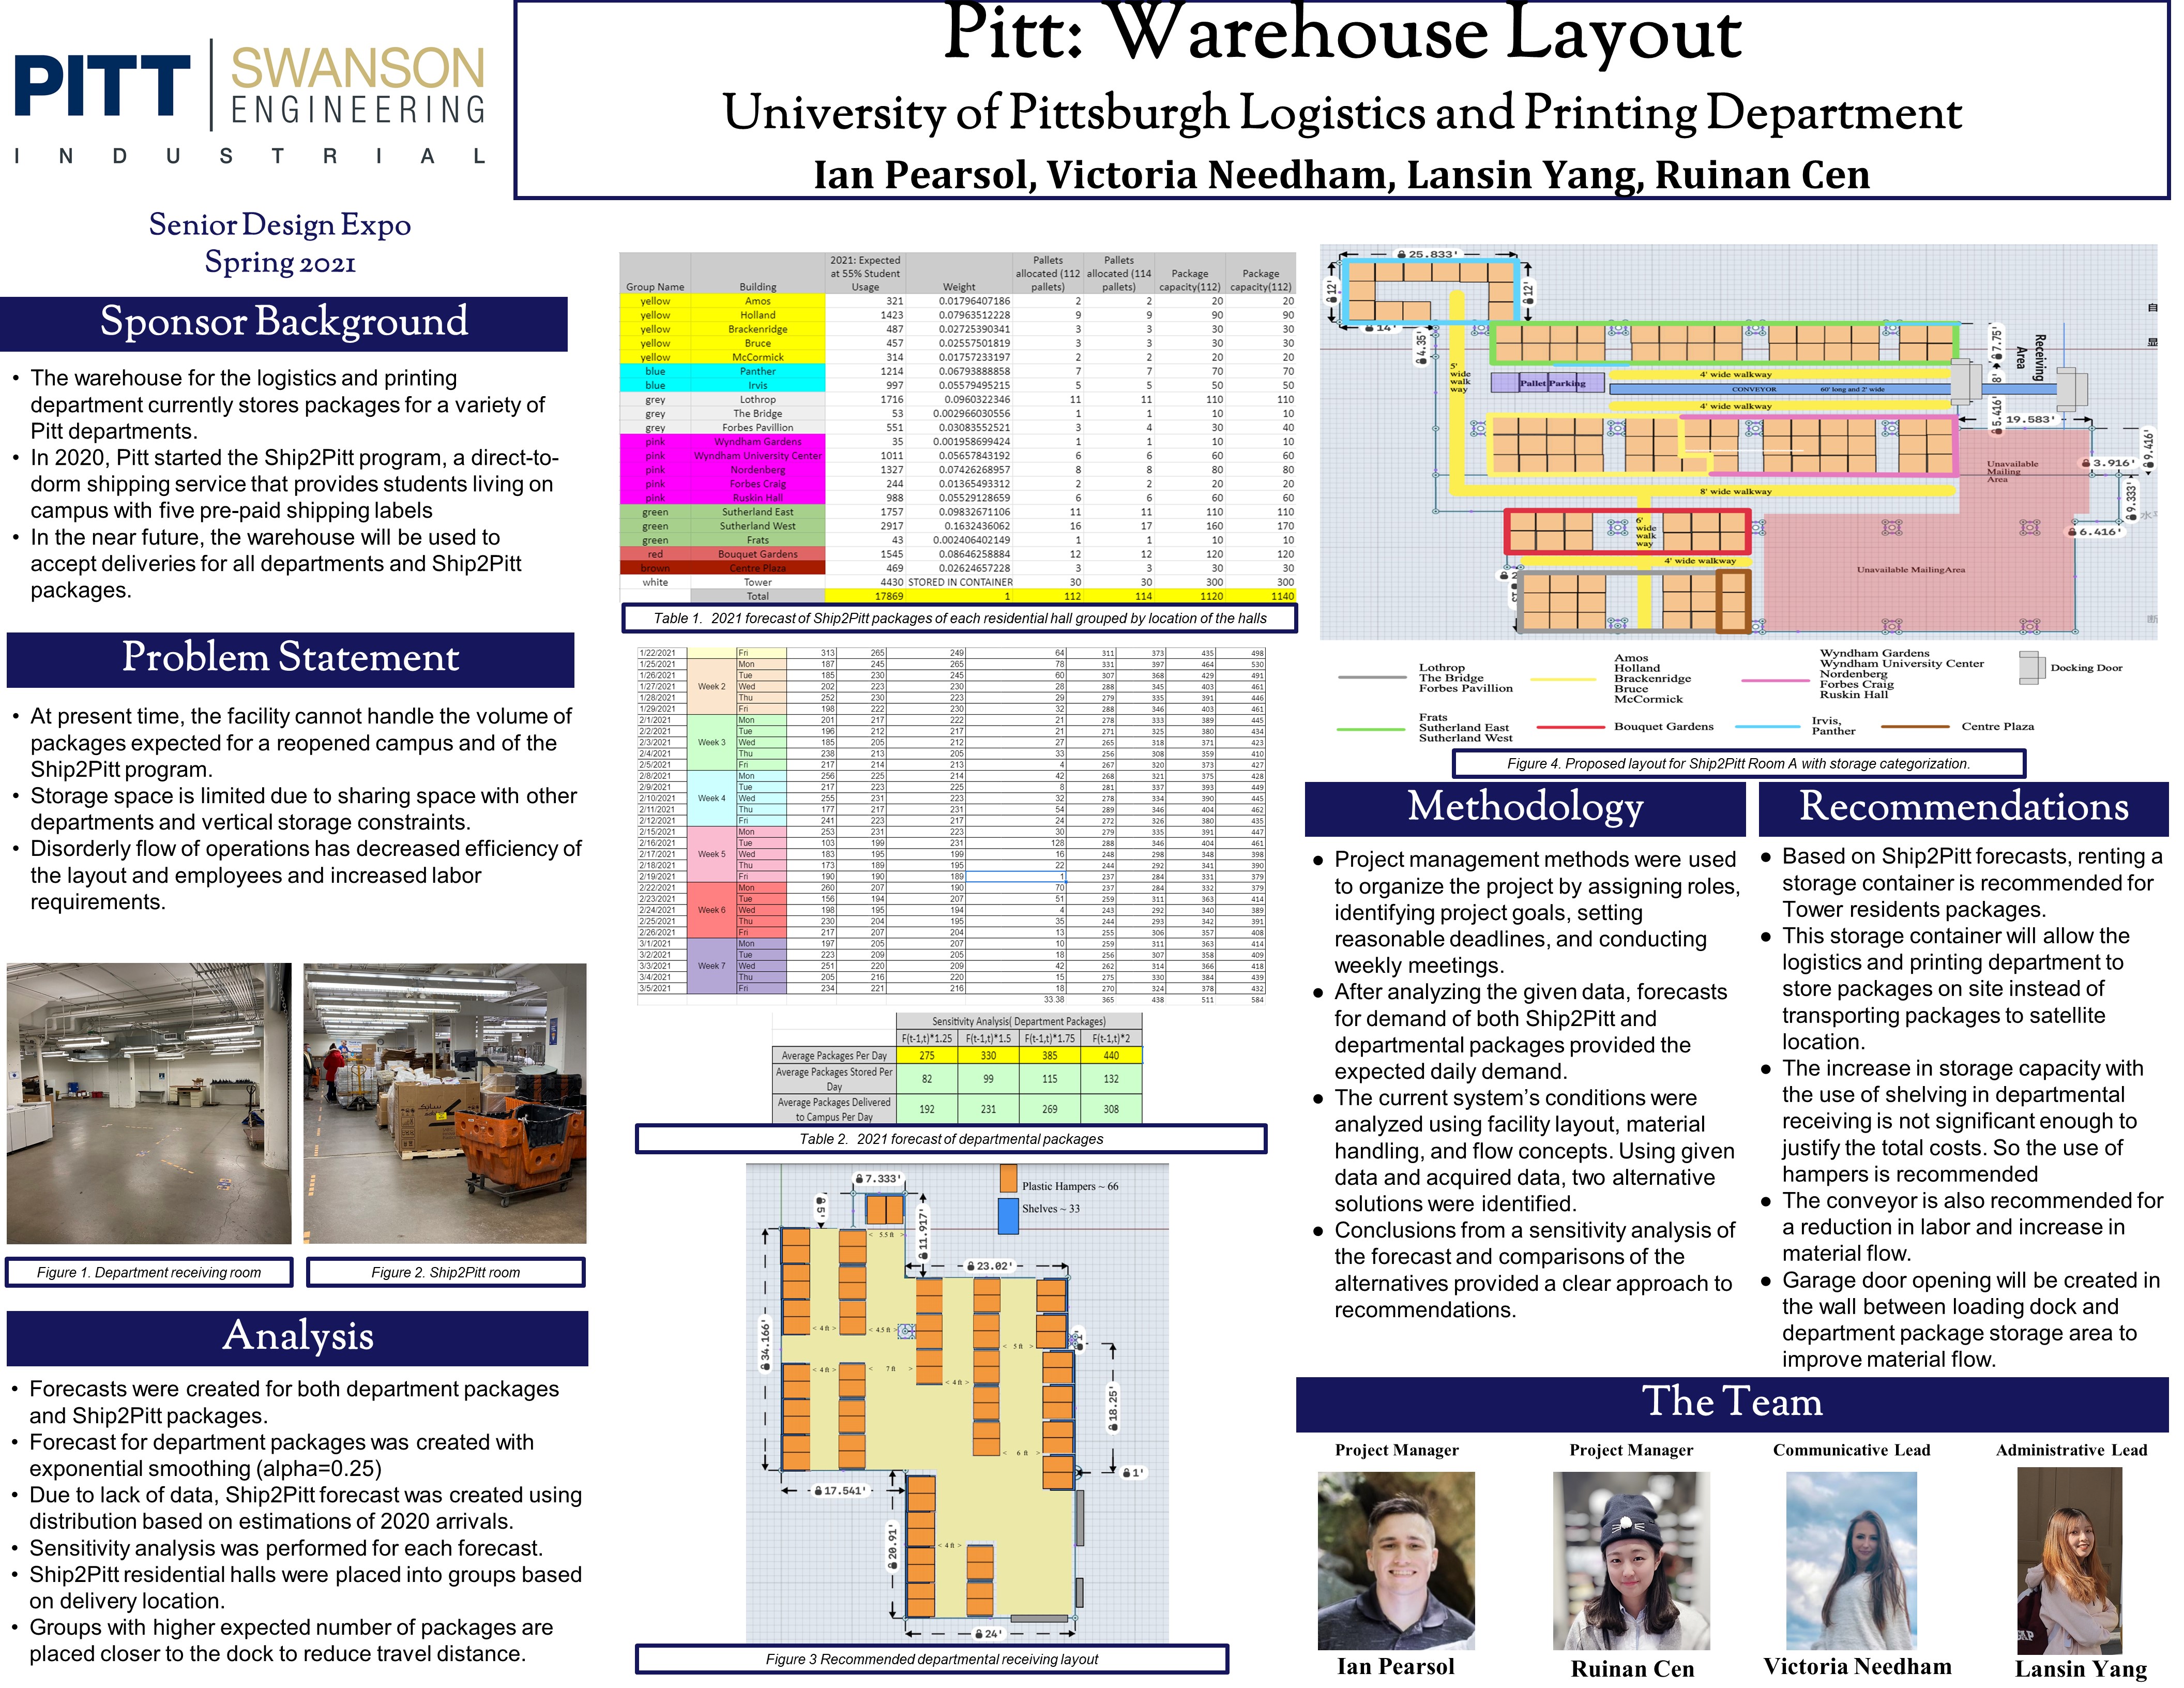 Senior Design Project - Pitt Warehouse Layout